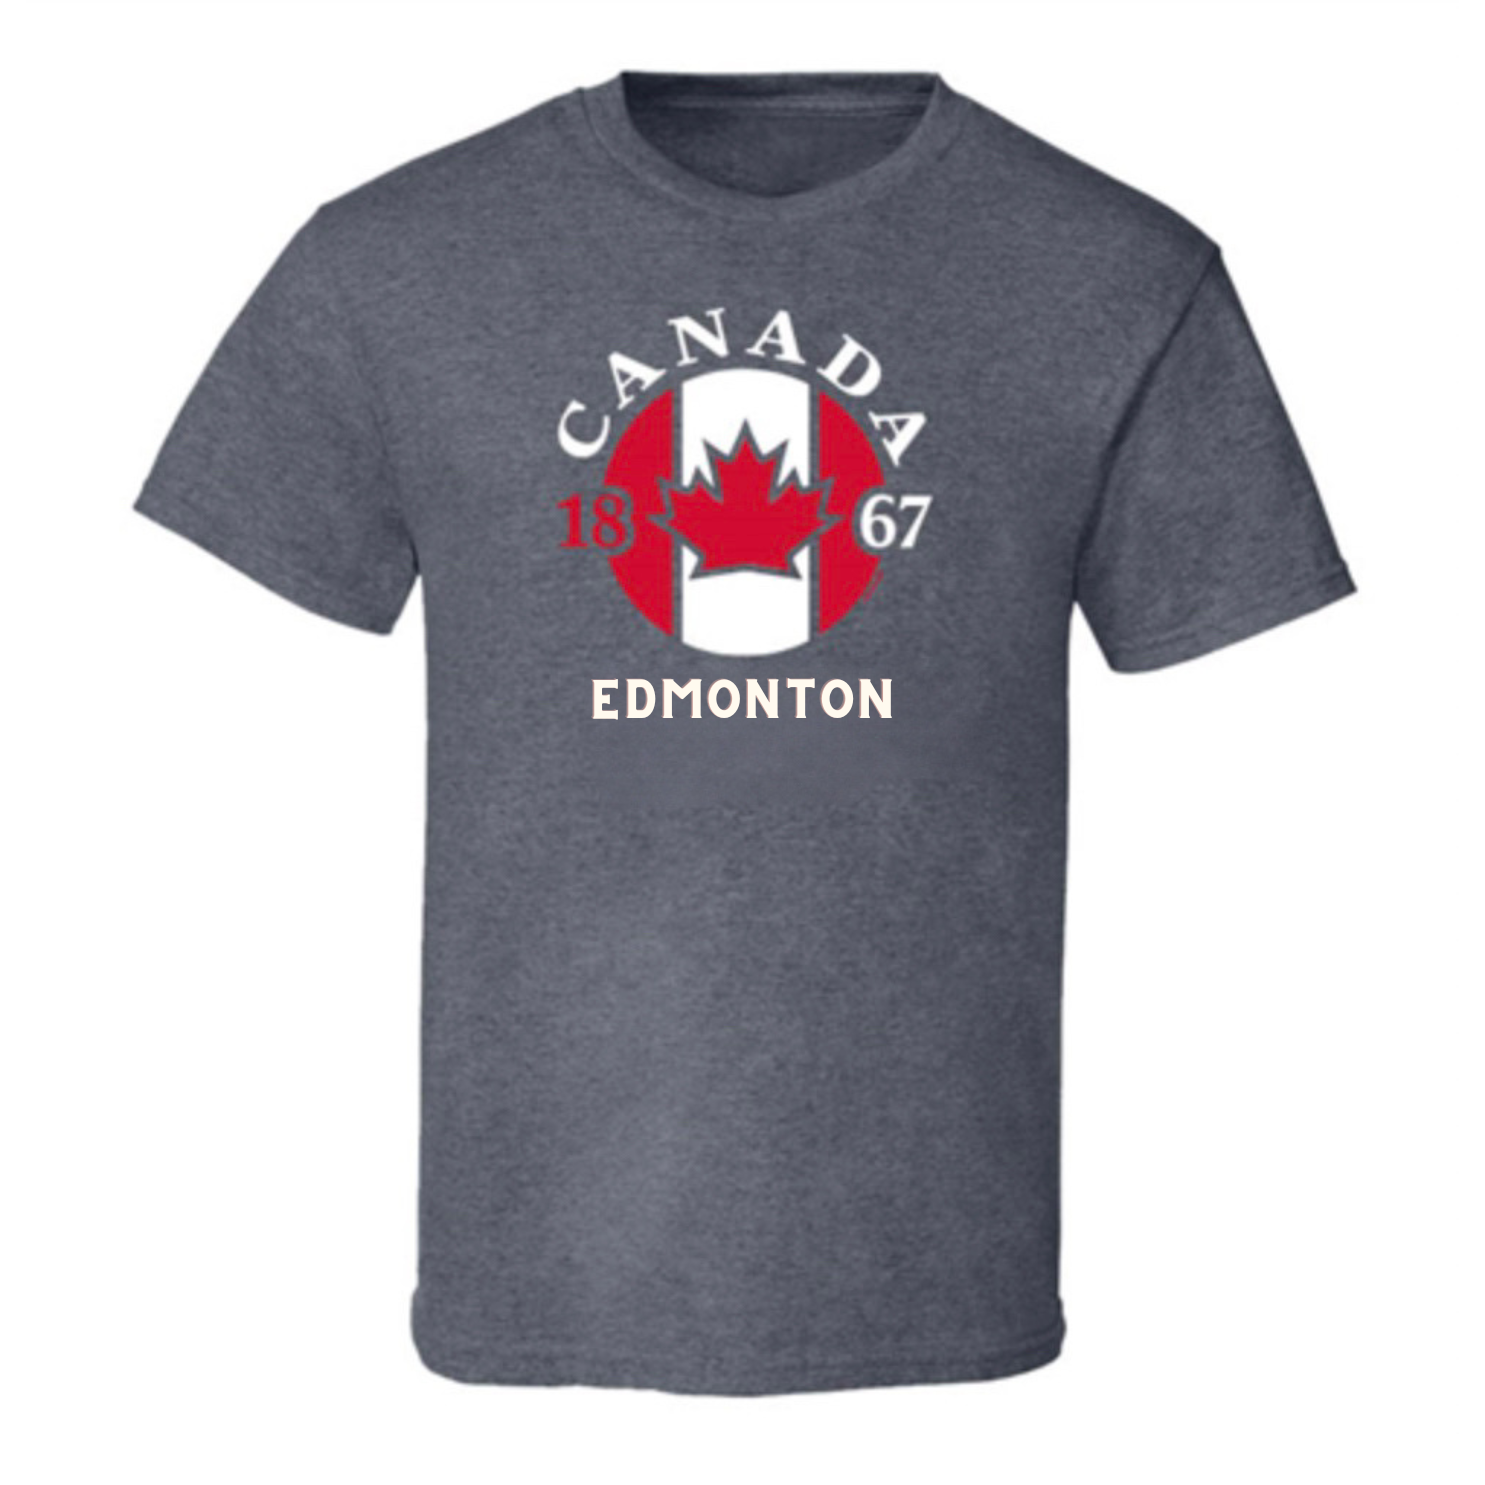 Edmonton T-Shirt Adult Charcoal Heather Circle Flag